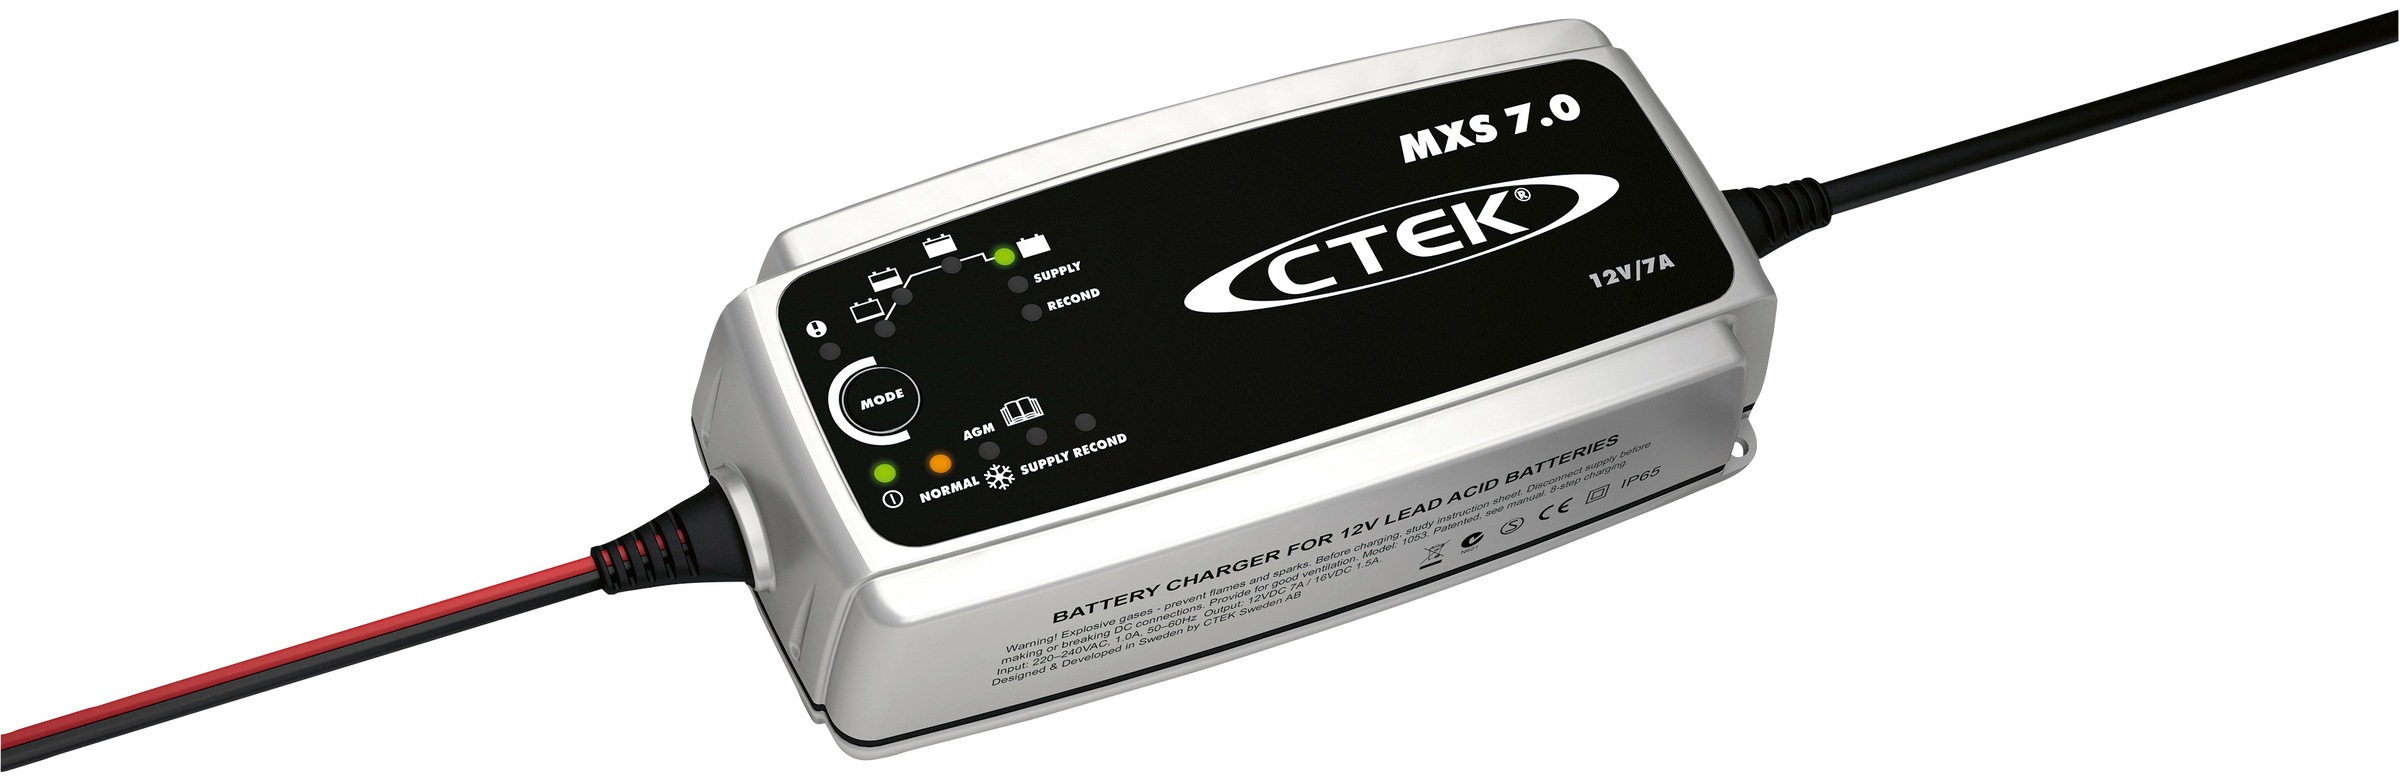 CTEK Batterie-Ladegerät »MXS 7.0«, Versorgungsprogramm / Supply-Modus